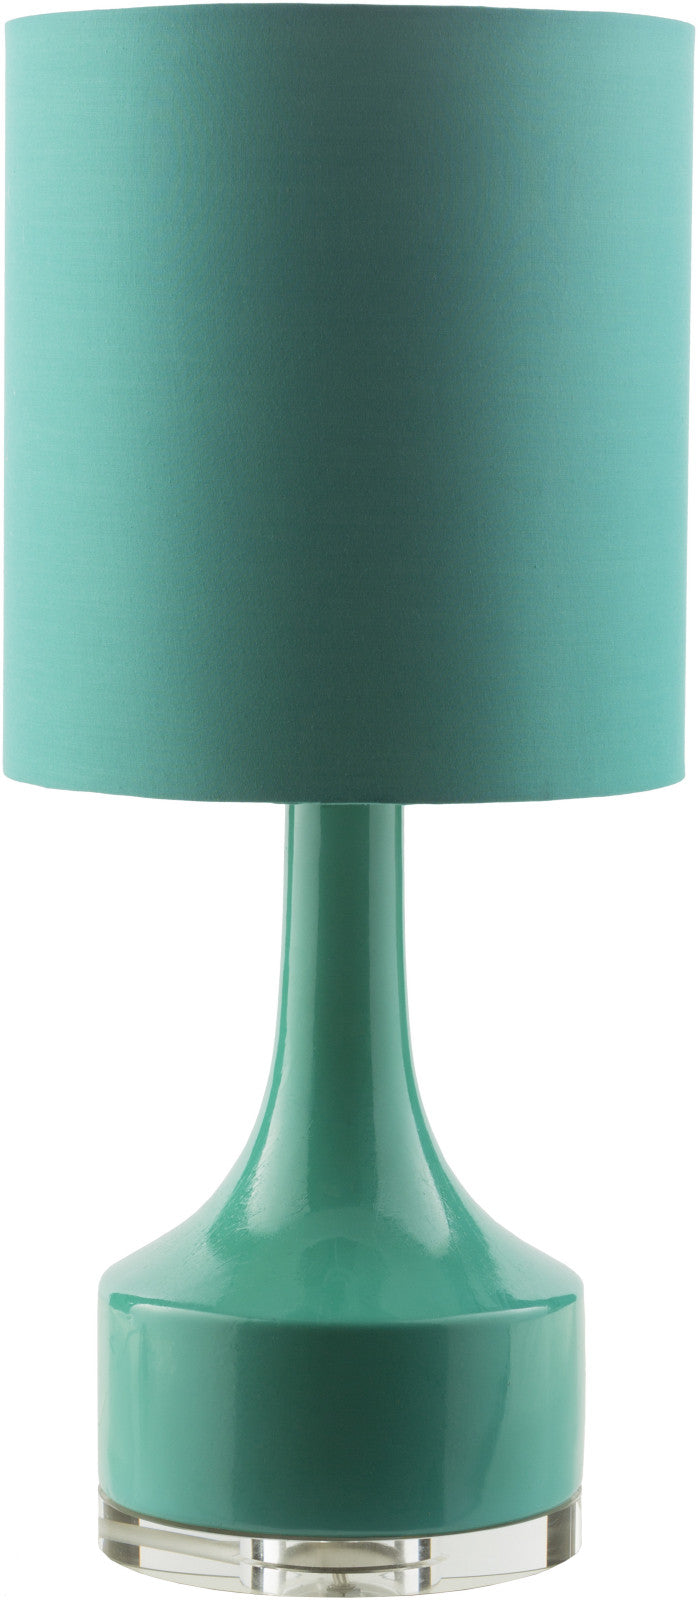 Surya Farris FRR-358 Green Lamp Table Lamp